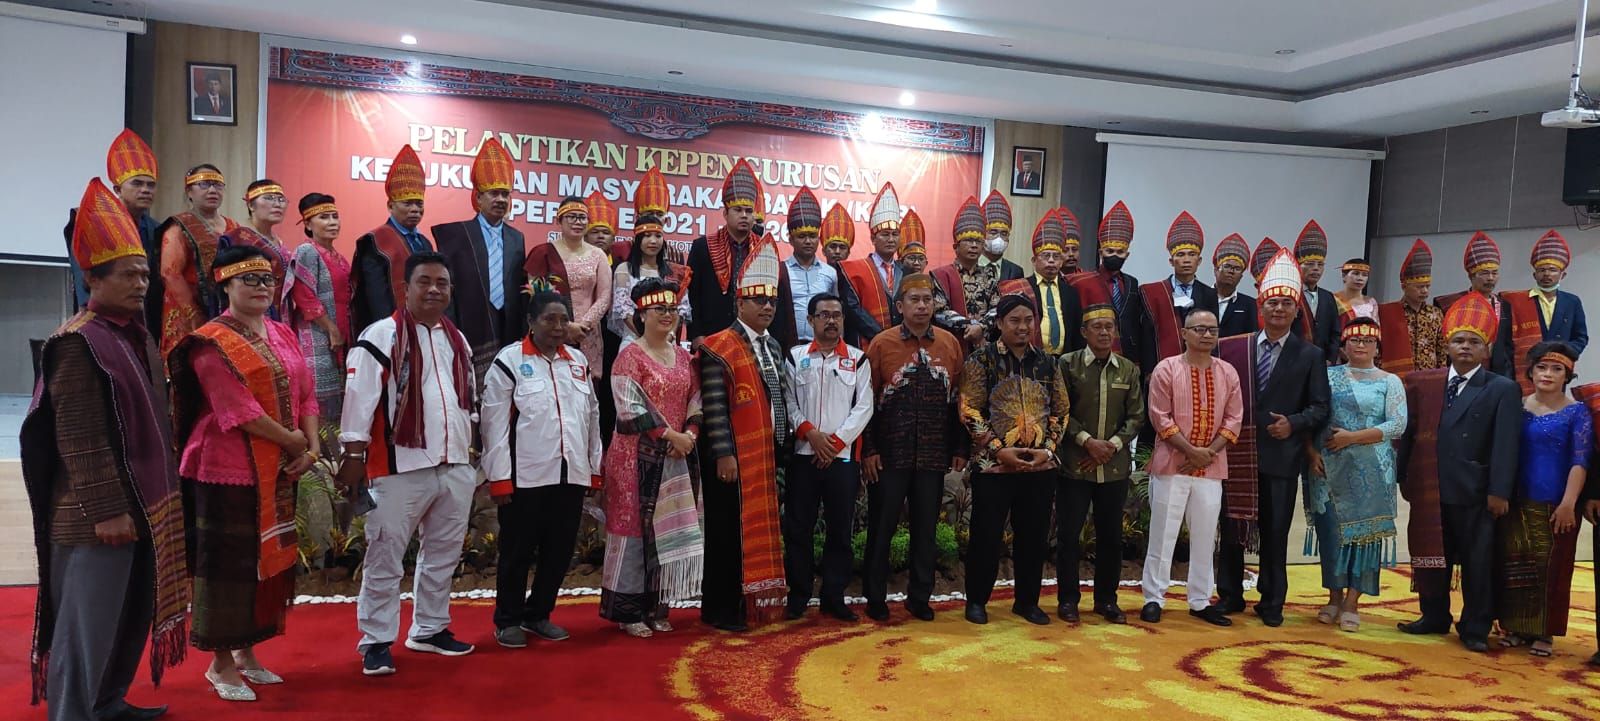 Ketua KMB Kabupaten Jayapura Sihar L. Tobing, S.H., saat foto bersama Kerukunan Masyarakat Batak.